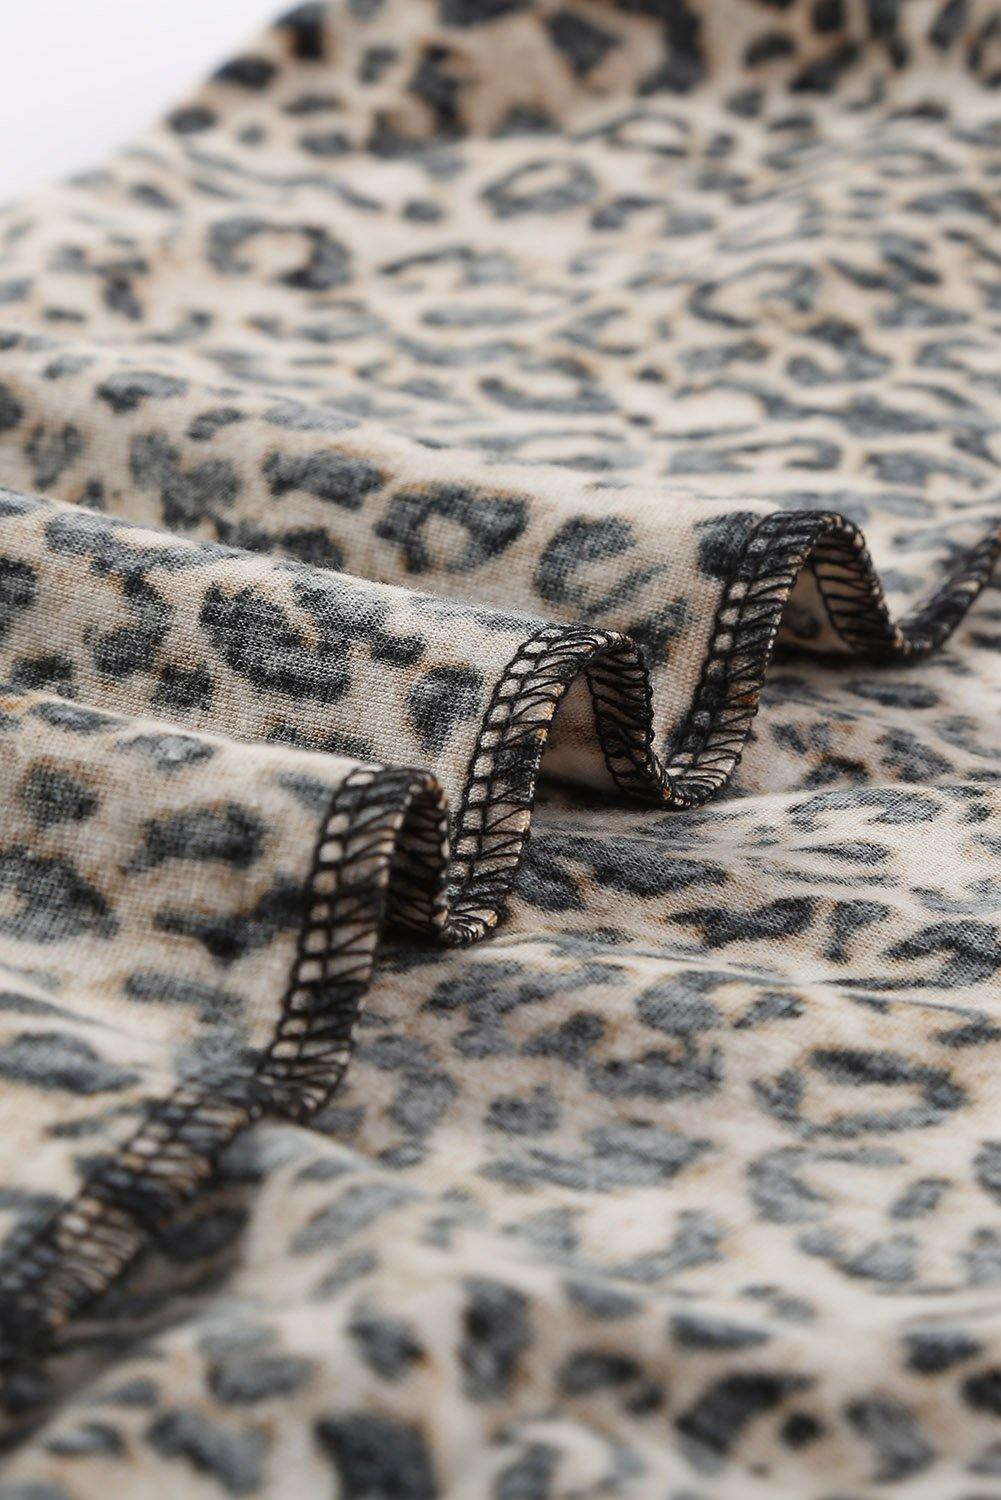 Ruffled Sleeves Leopard Tee - L & M Kee, LLC